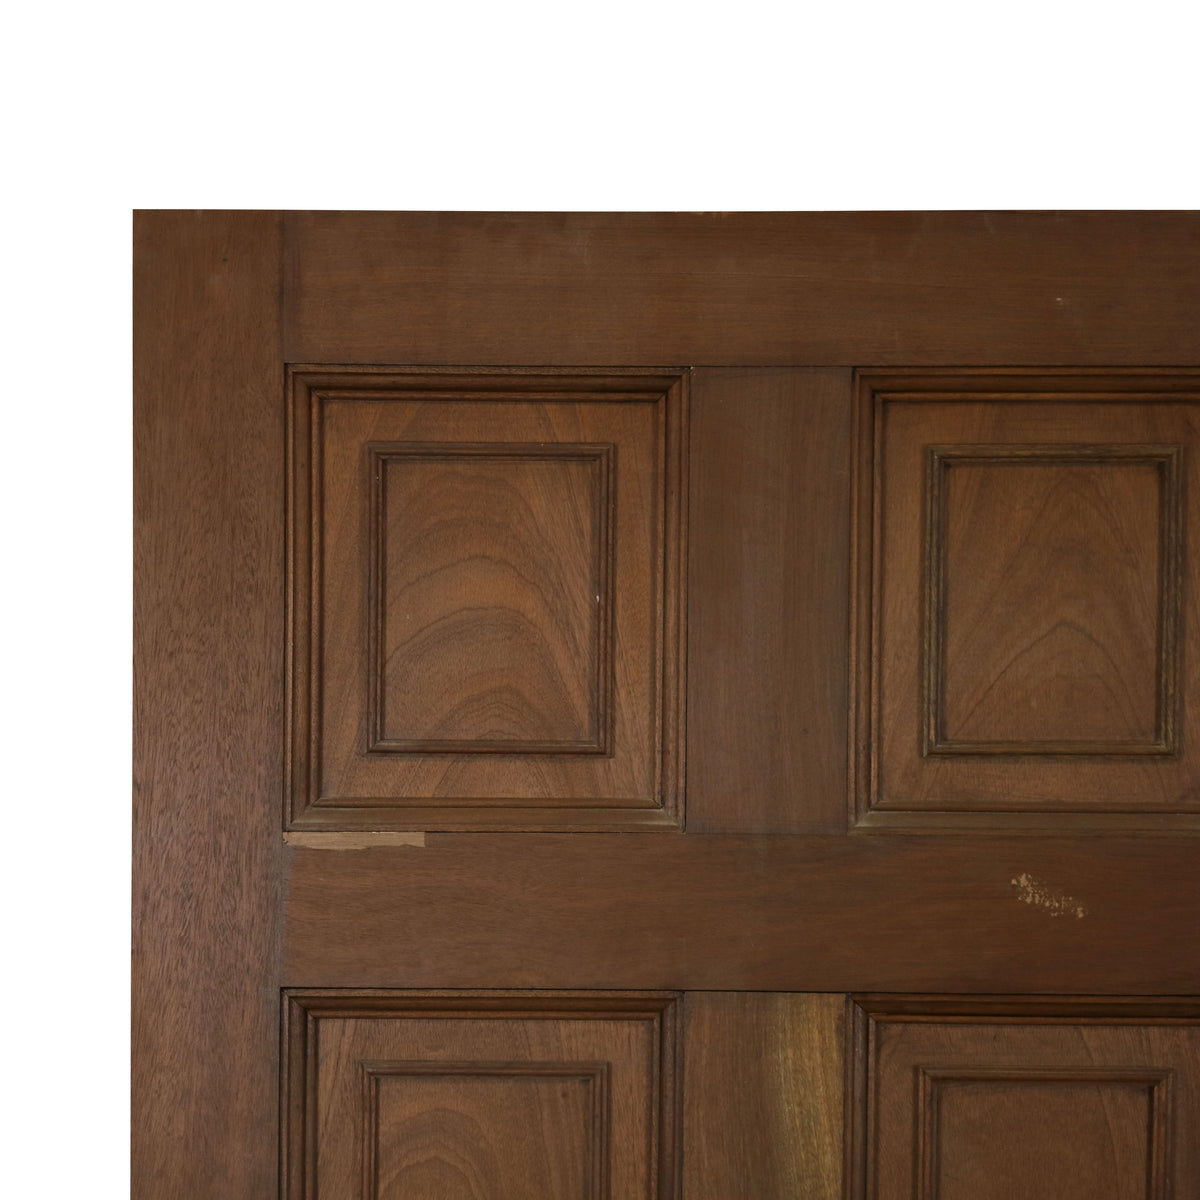 Reclaimed Mahogany Georgian Style Door - 188cm x 75.5cm | The Architectural Forum